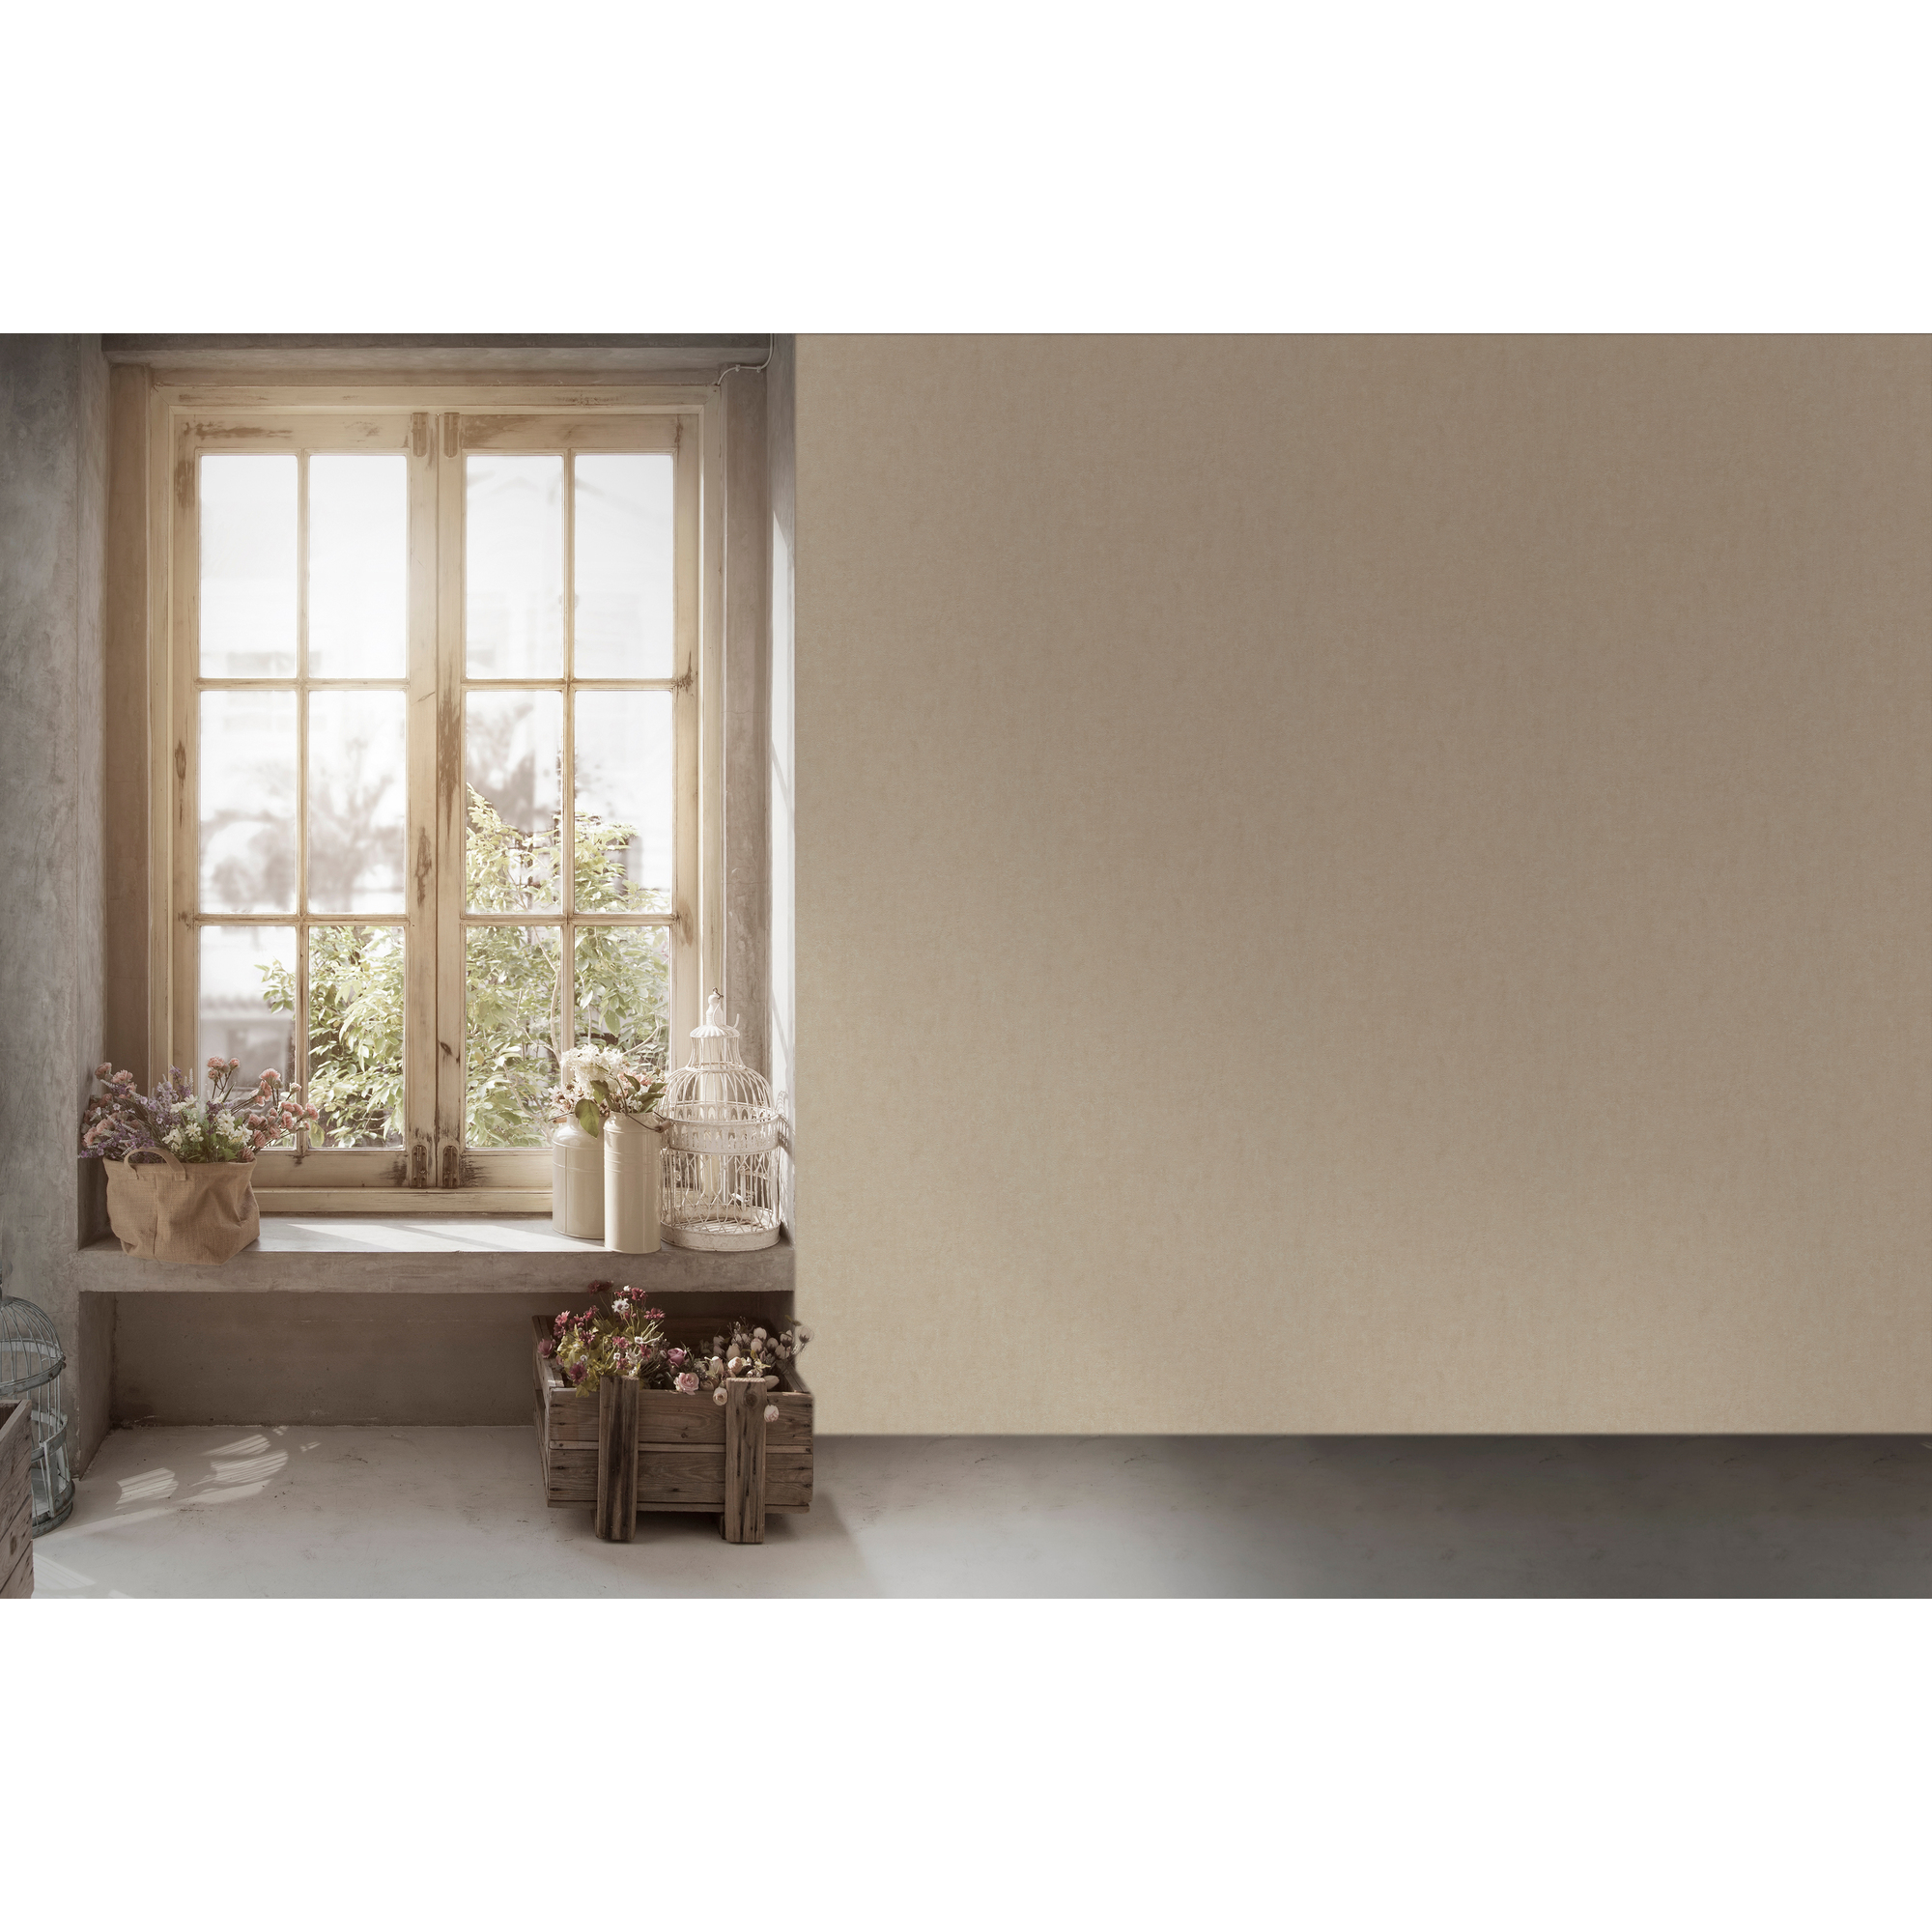 Vliestapete 'My Home. My Spa.' Betonoptik beige/creme 10,05 x 0,53 m + product picture